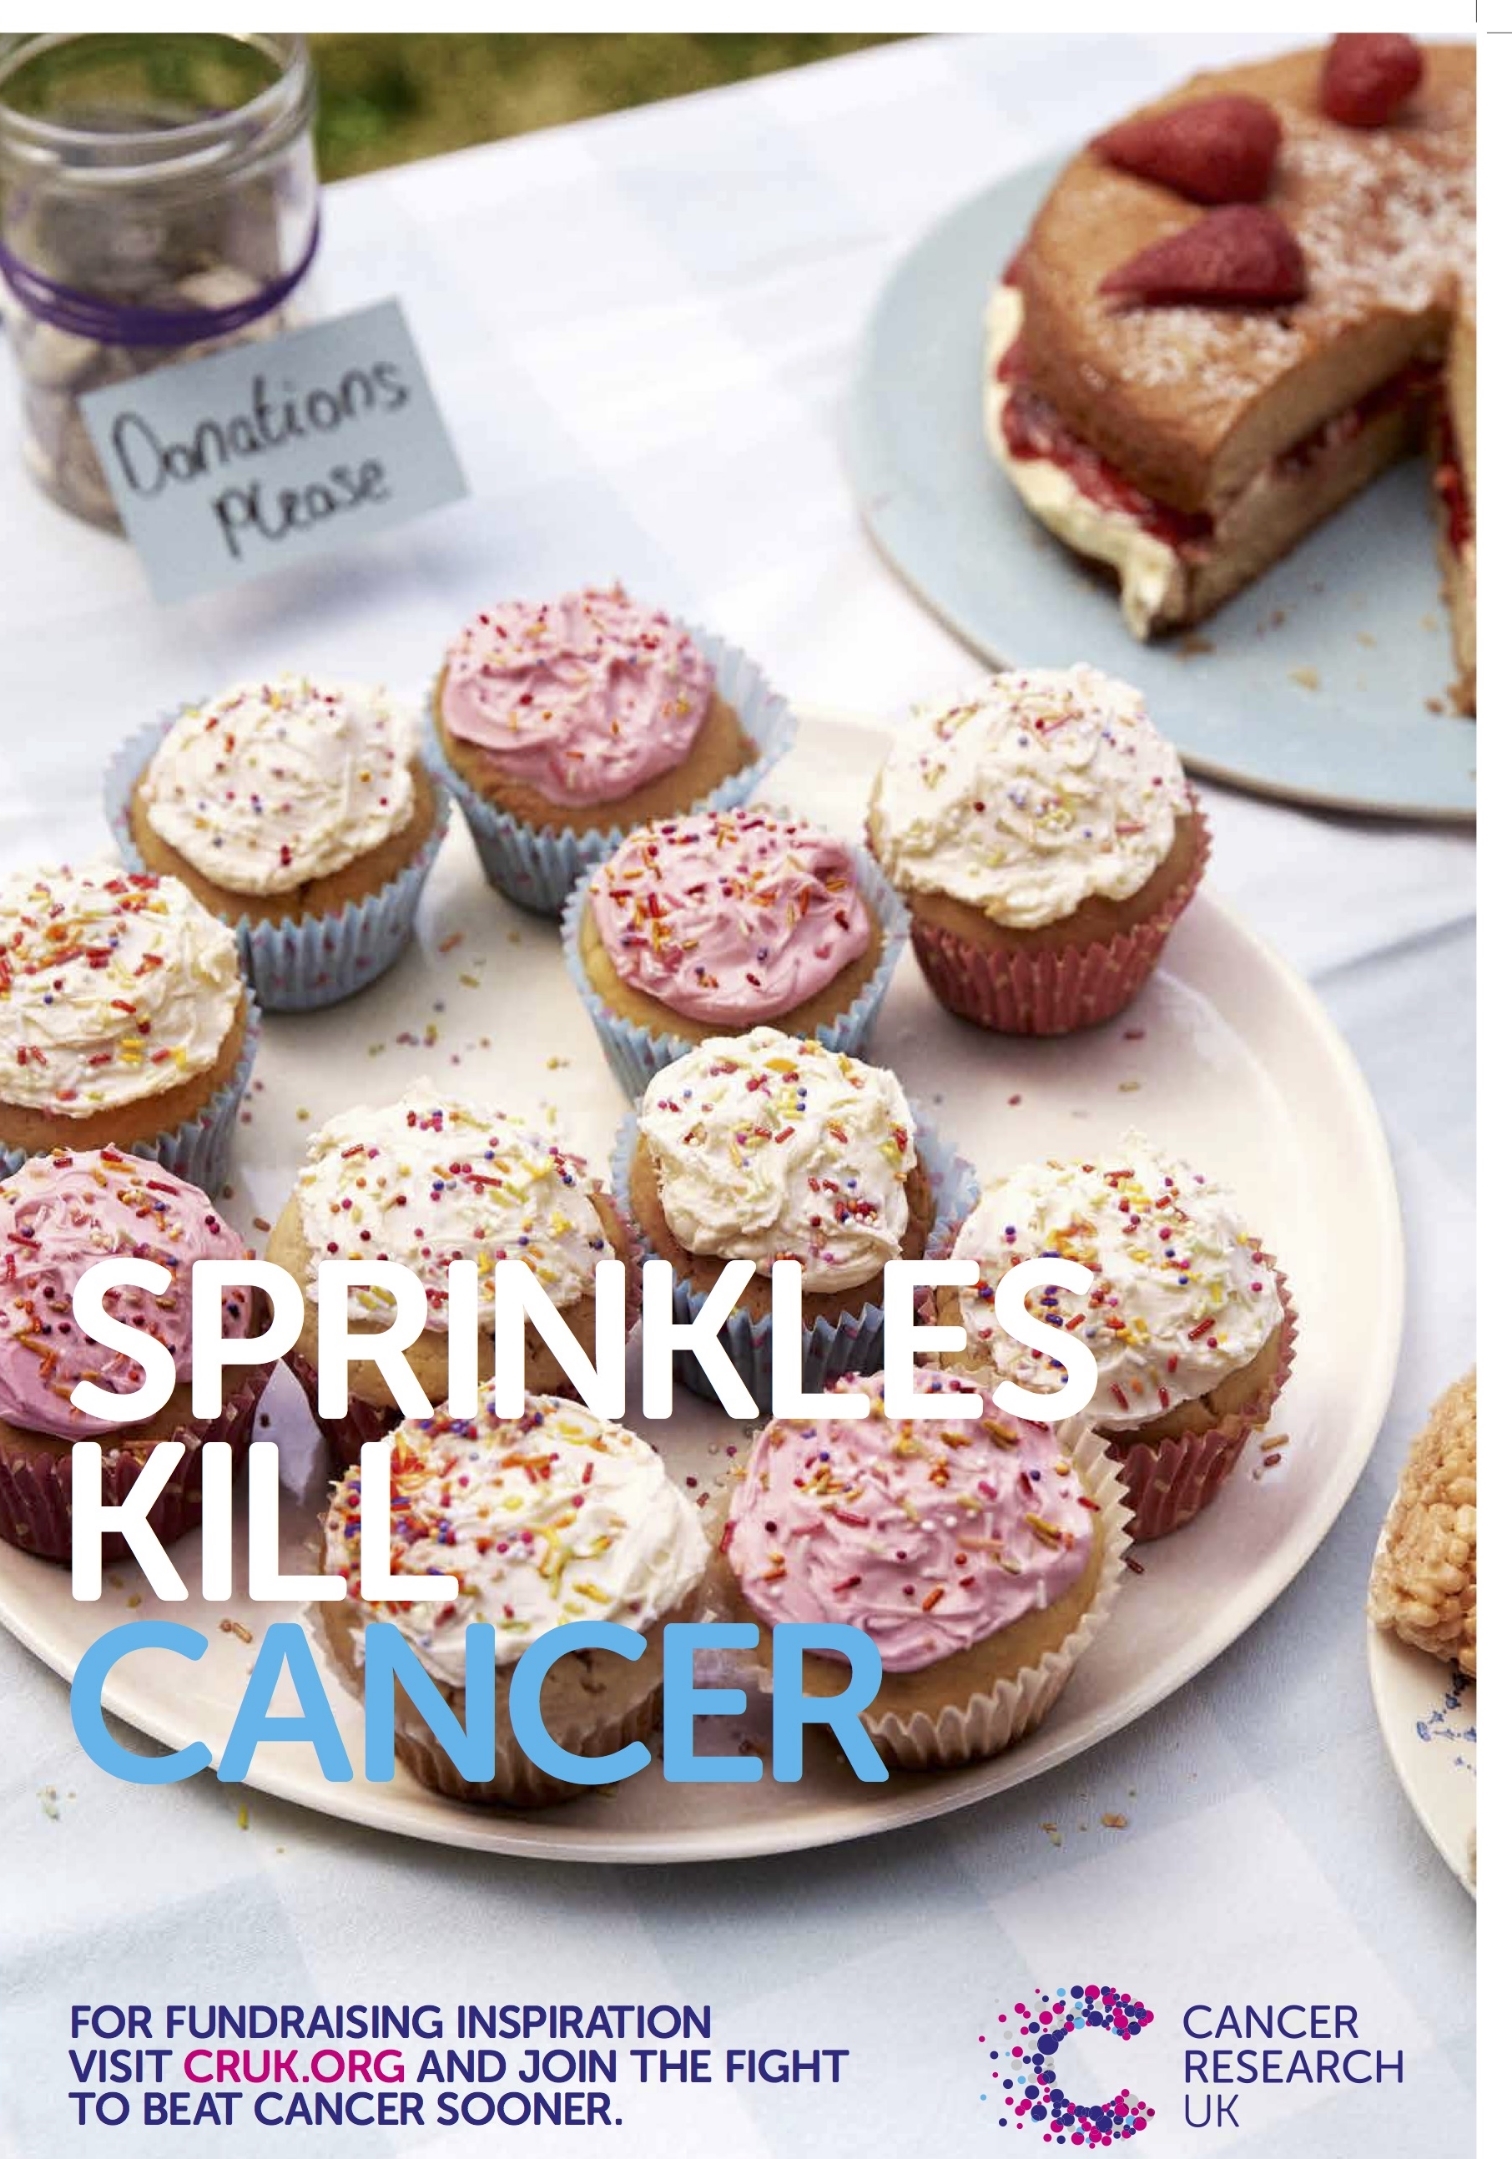 Cancer Research UK Sprinkles